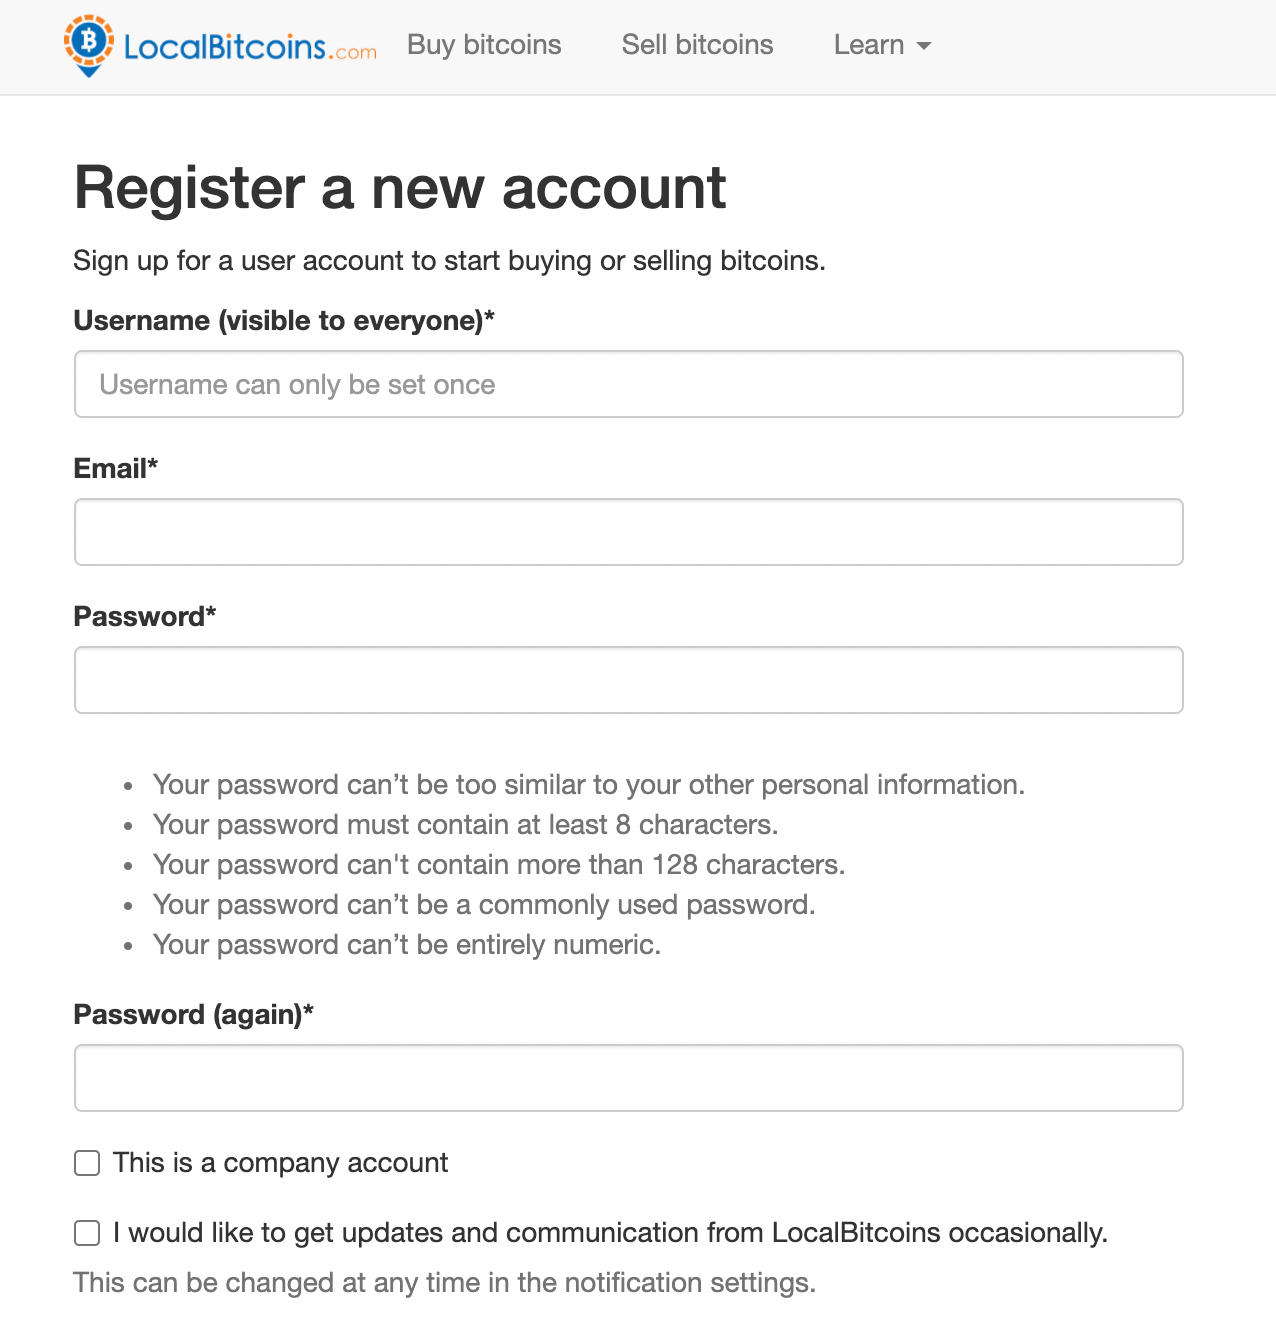 Registration on LocalBitcoins